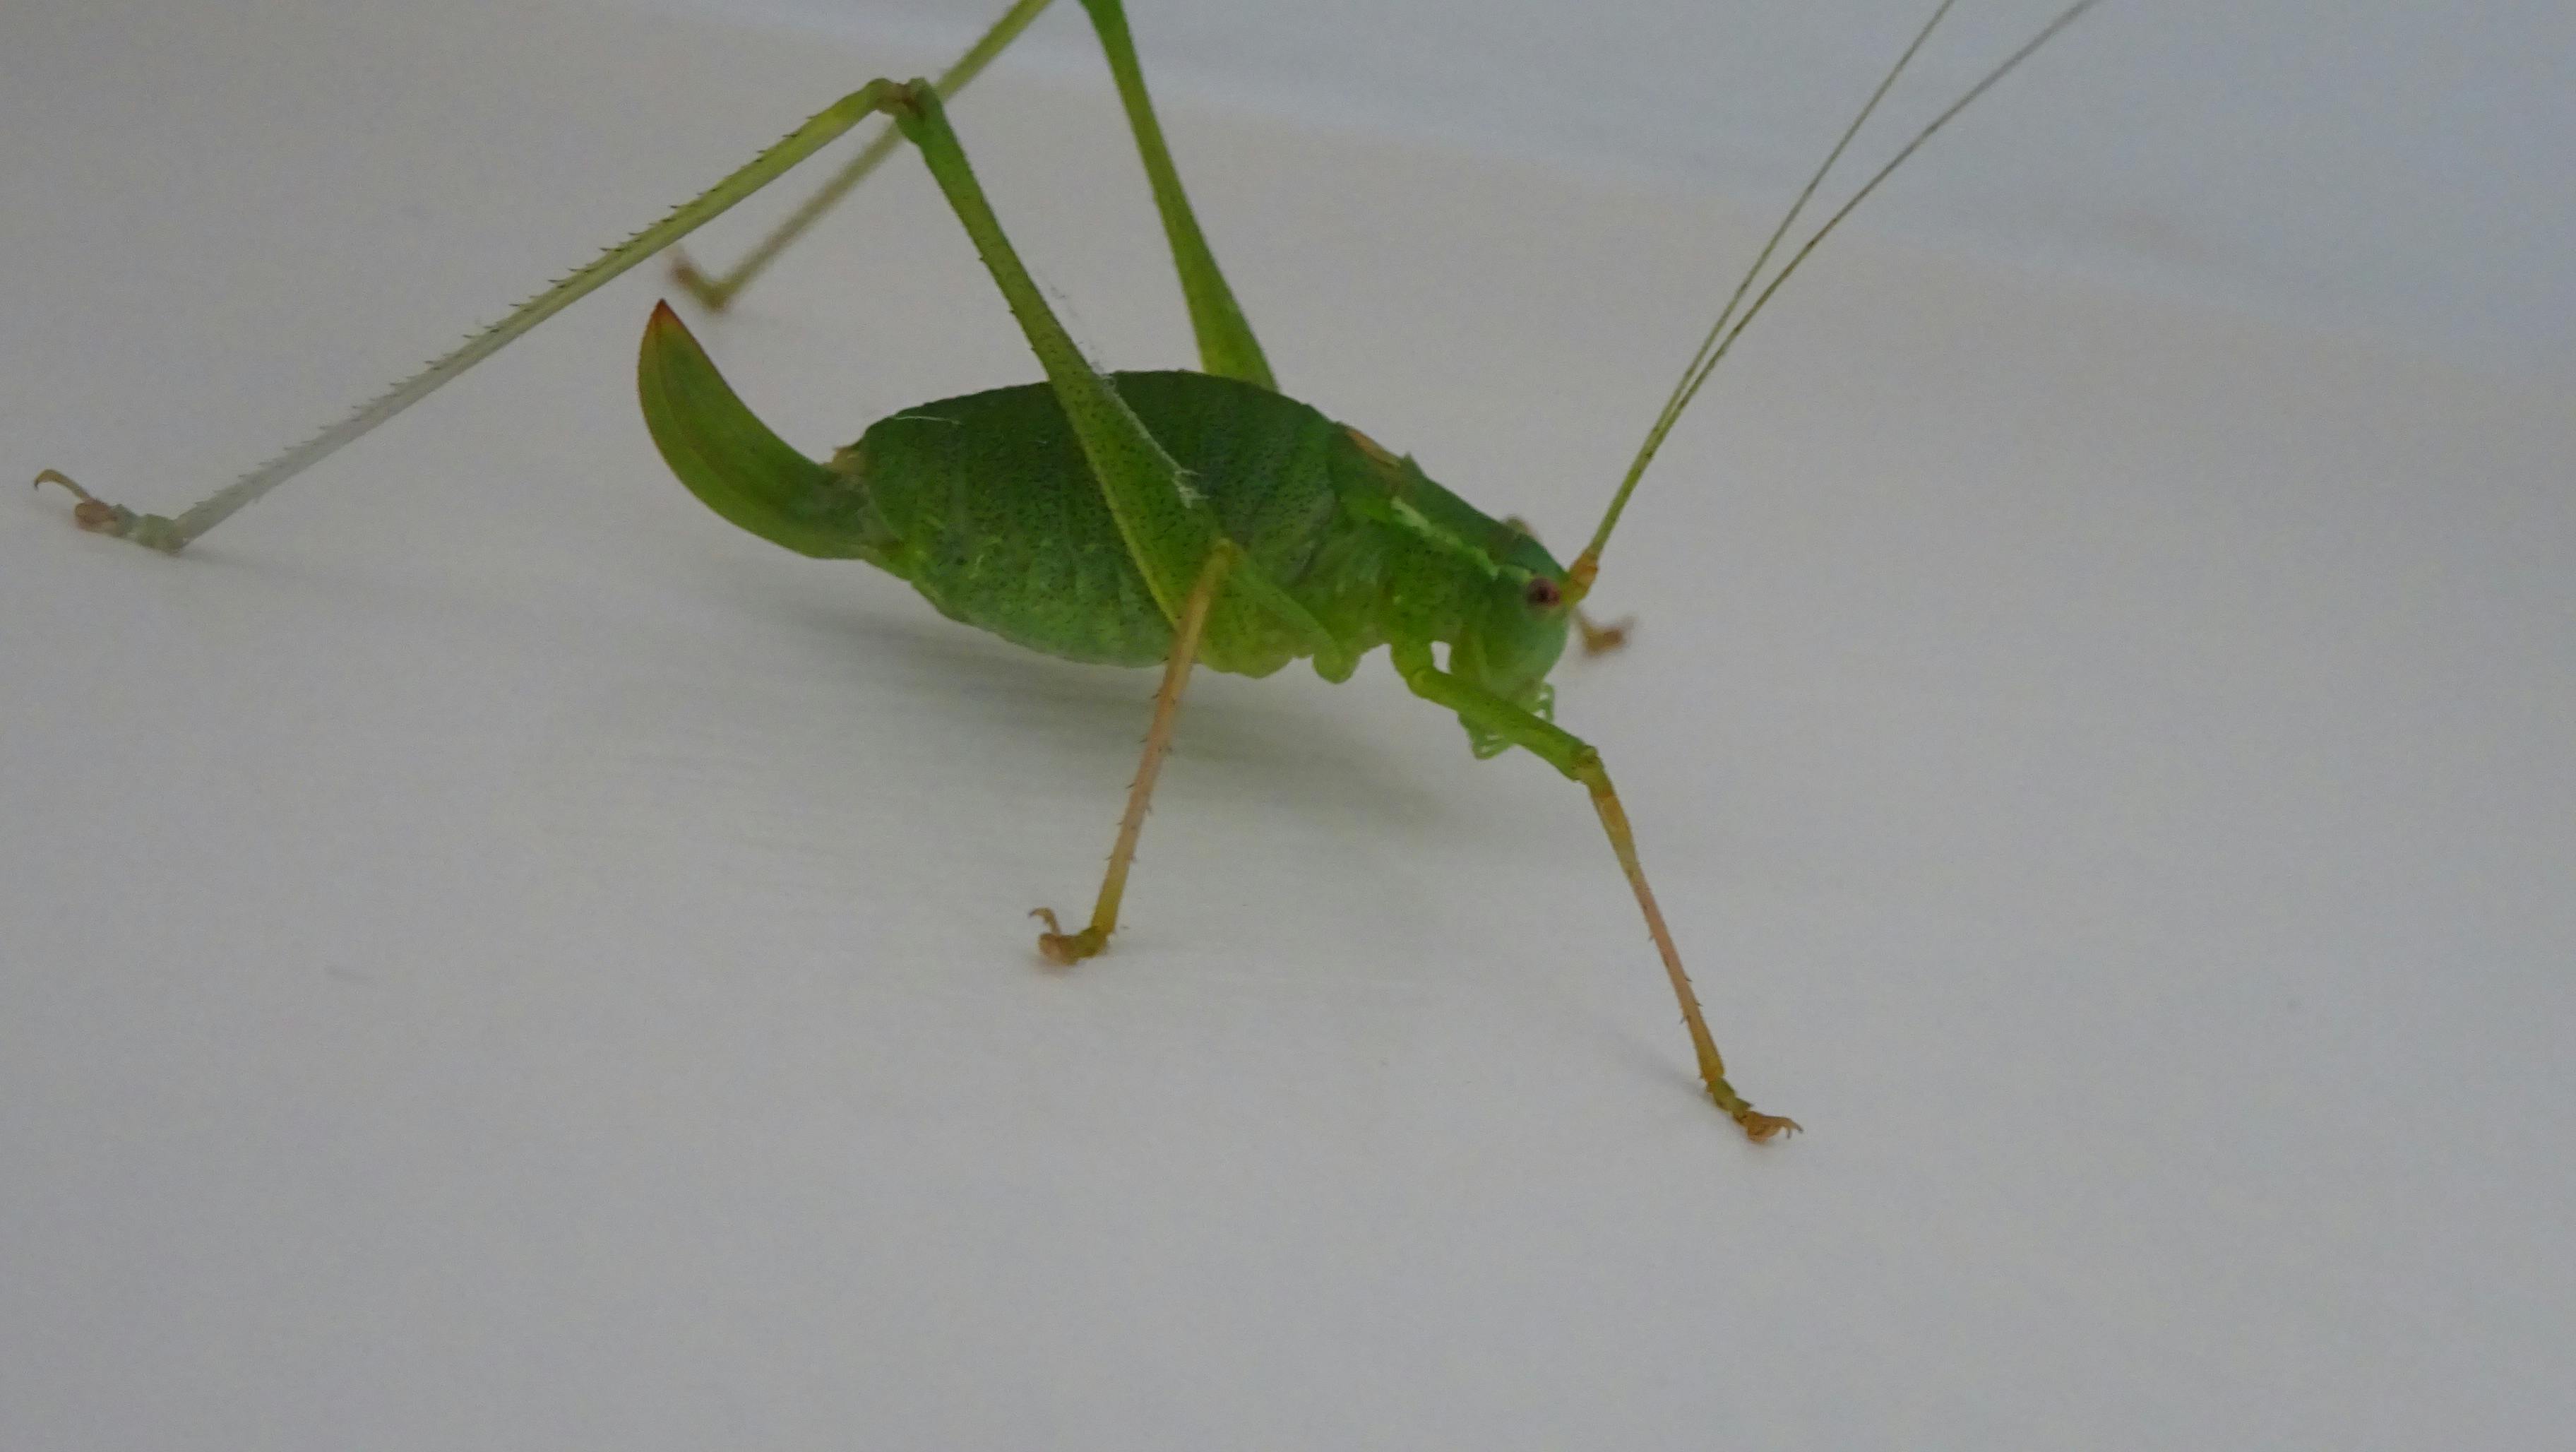 Free stock photo of grasshopper, nature photography, wildlife